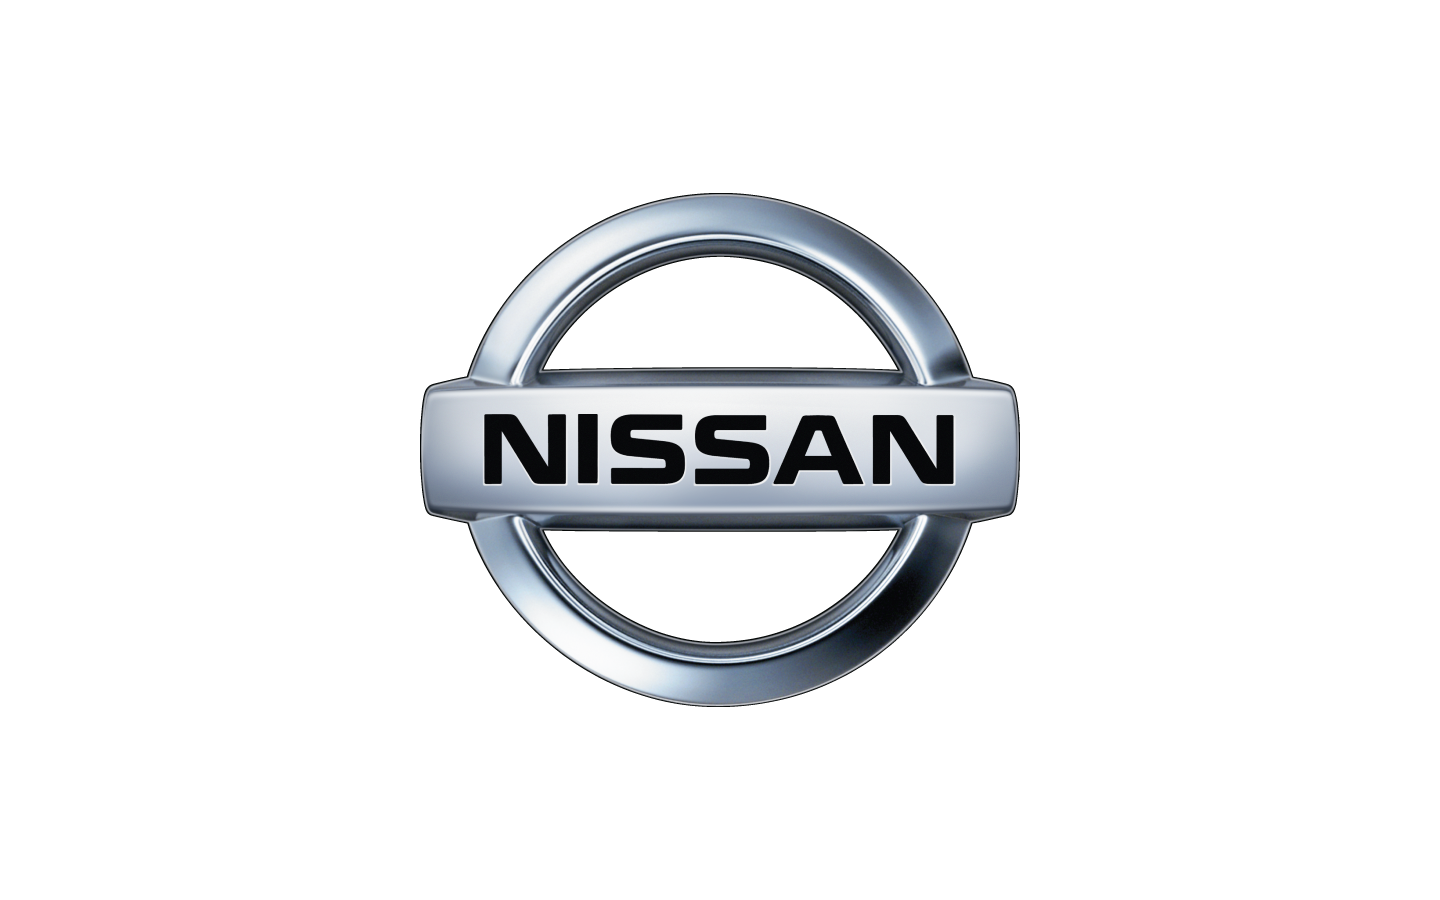 Nissan Cars Logo Hd Mobile Wa